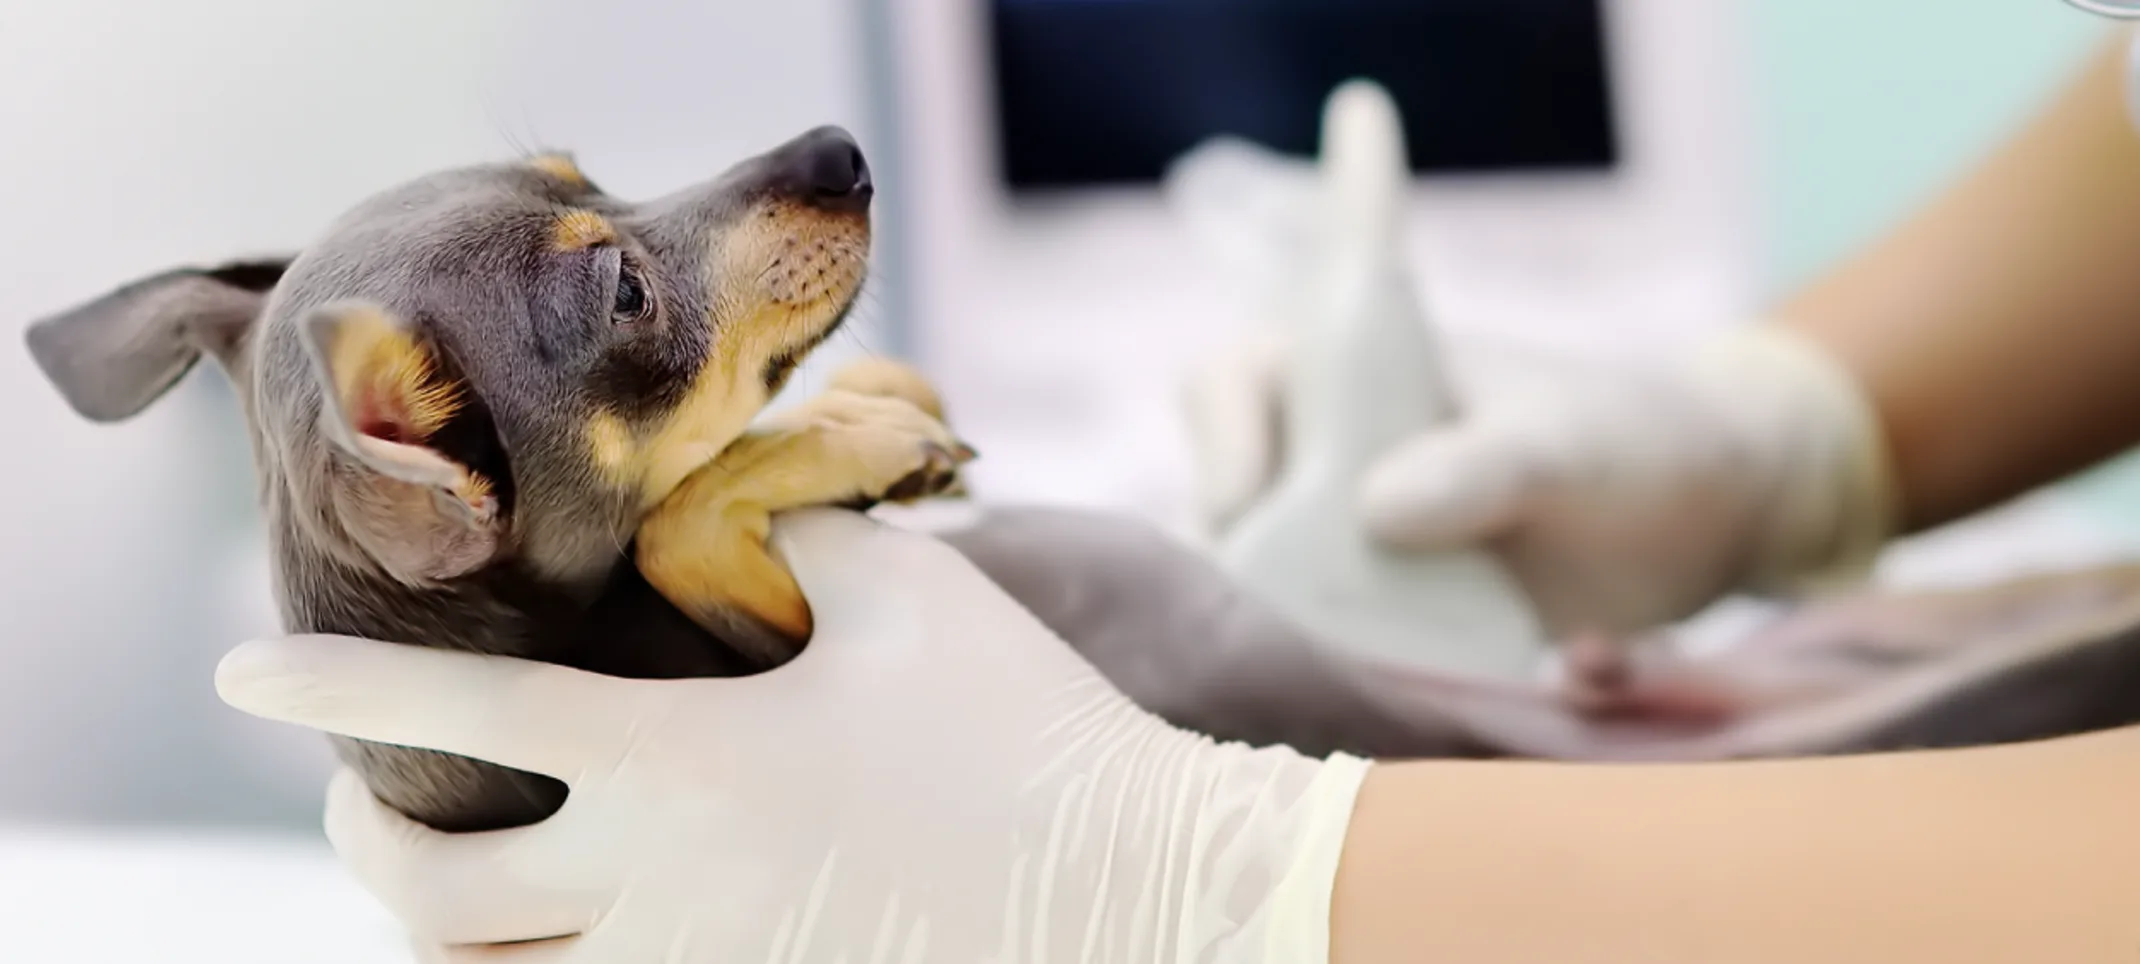 Dog receiving ultrasound exam